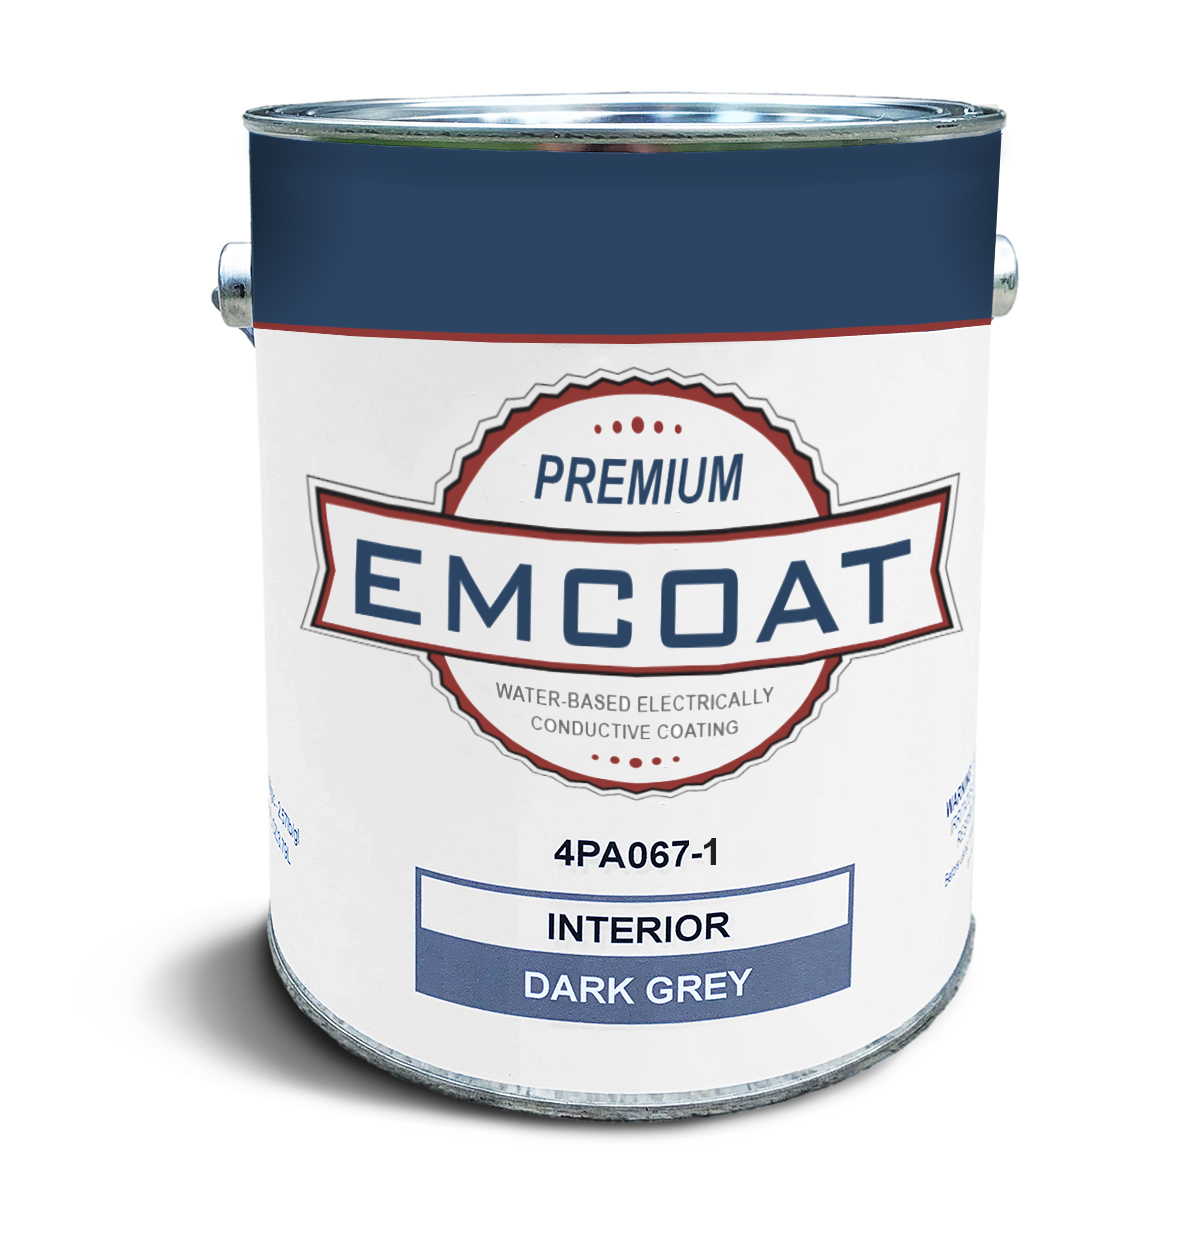 EmCoat Conductive Coating Paint